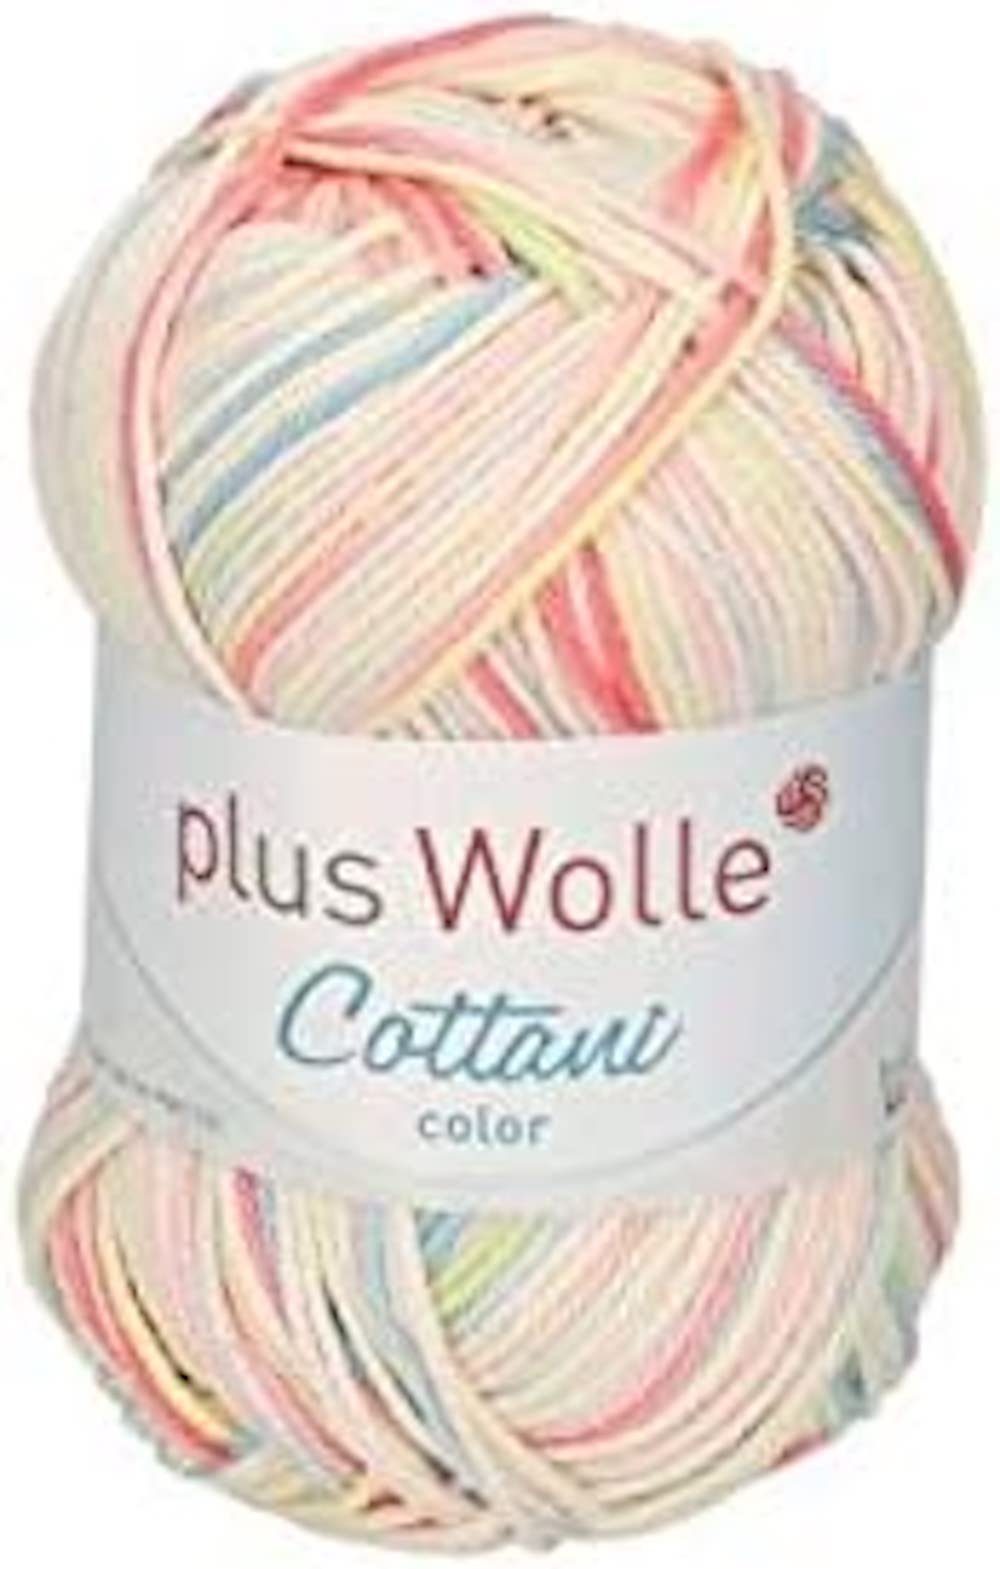 H-Erzmade Dekofigur Plus Wolle Cottani Color, 50g/125m, 100% Baumwolle pastellfarben